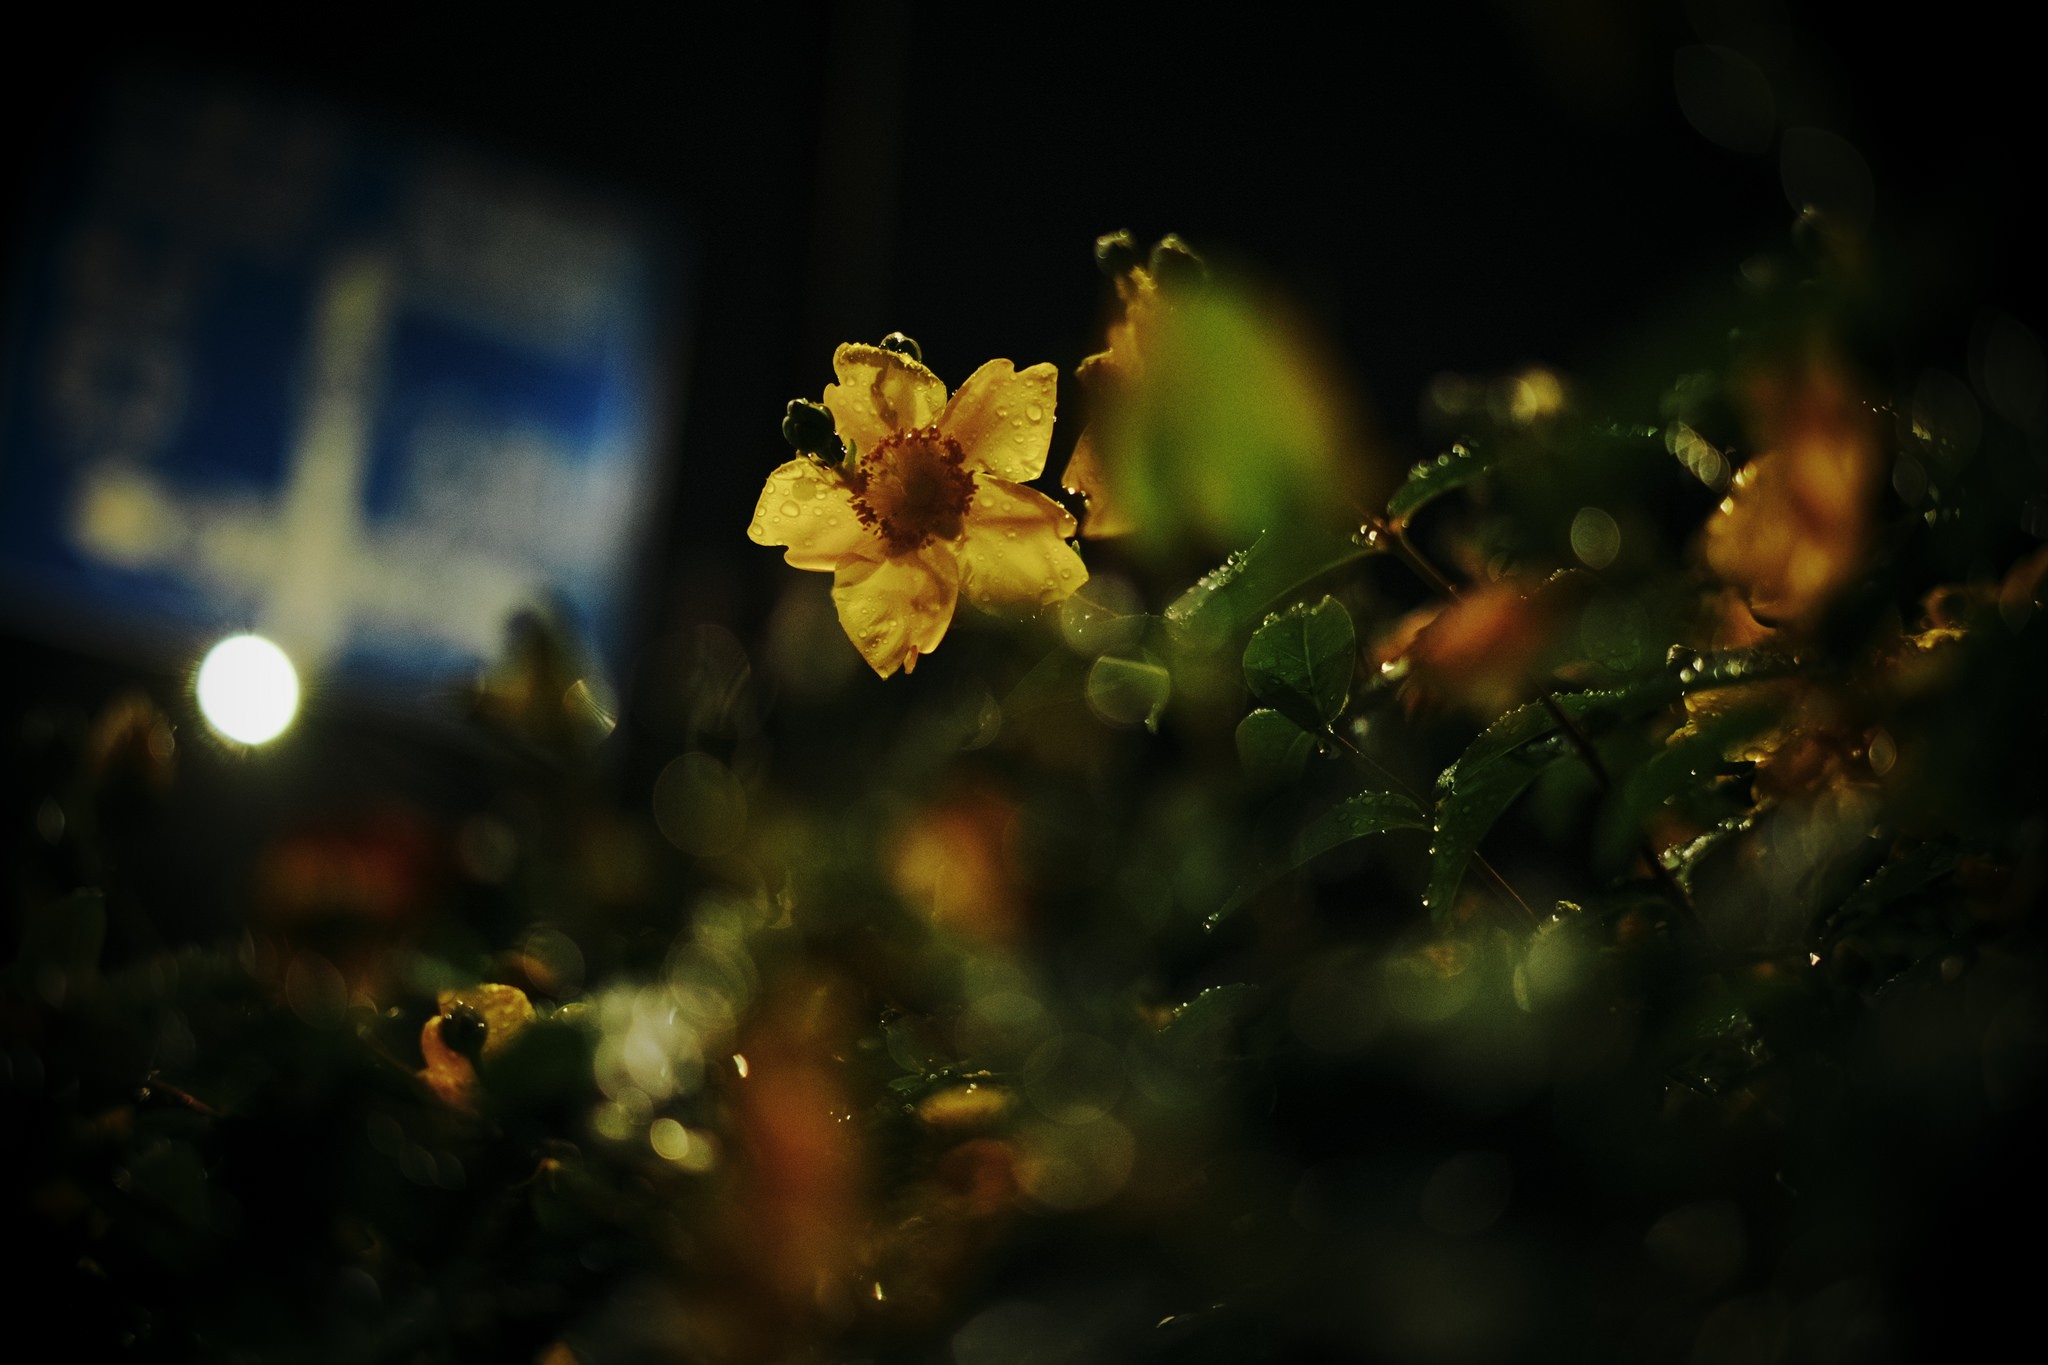 General 2048x1365 photography macro lights flowers leaves plants bokeh yellow flowers water drops garden